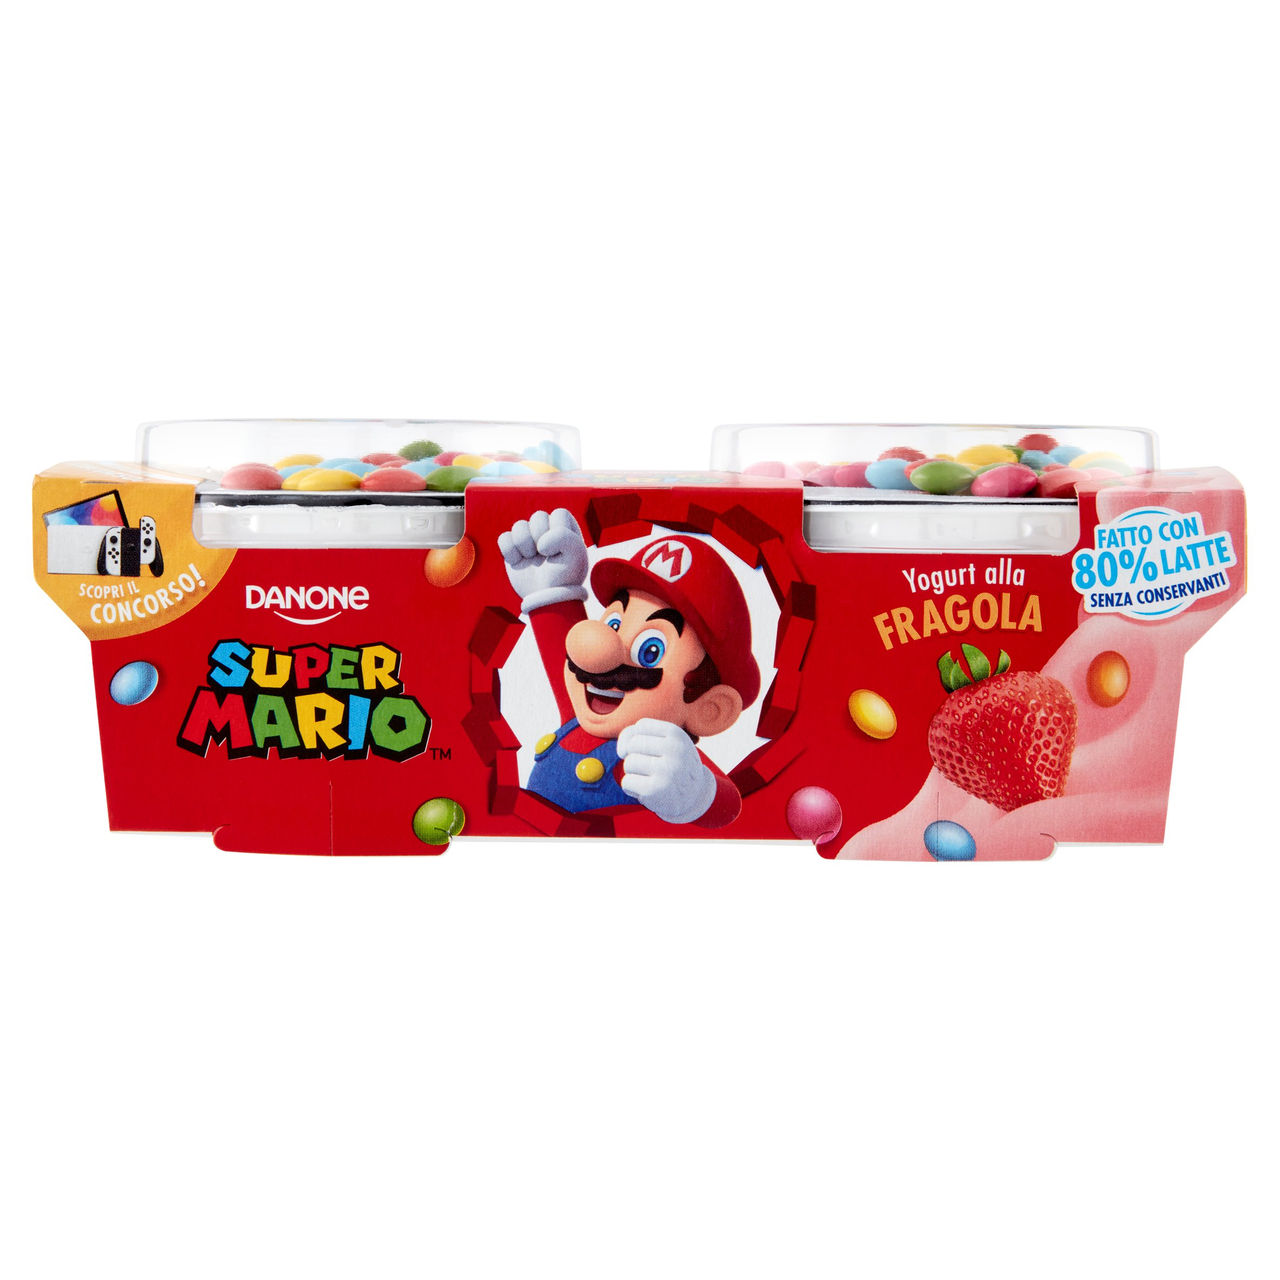 Danone Yogoloso Yogurt alla Fragola Super Mario